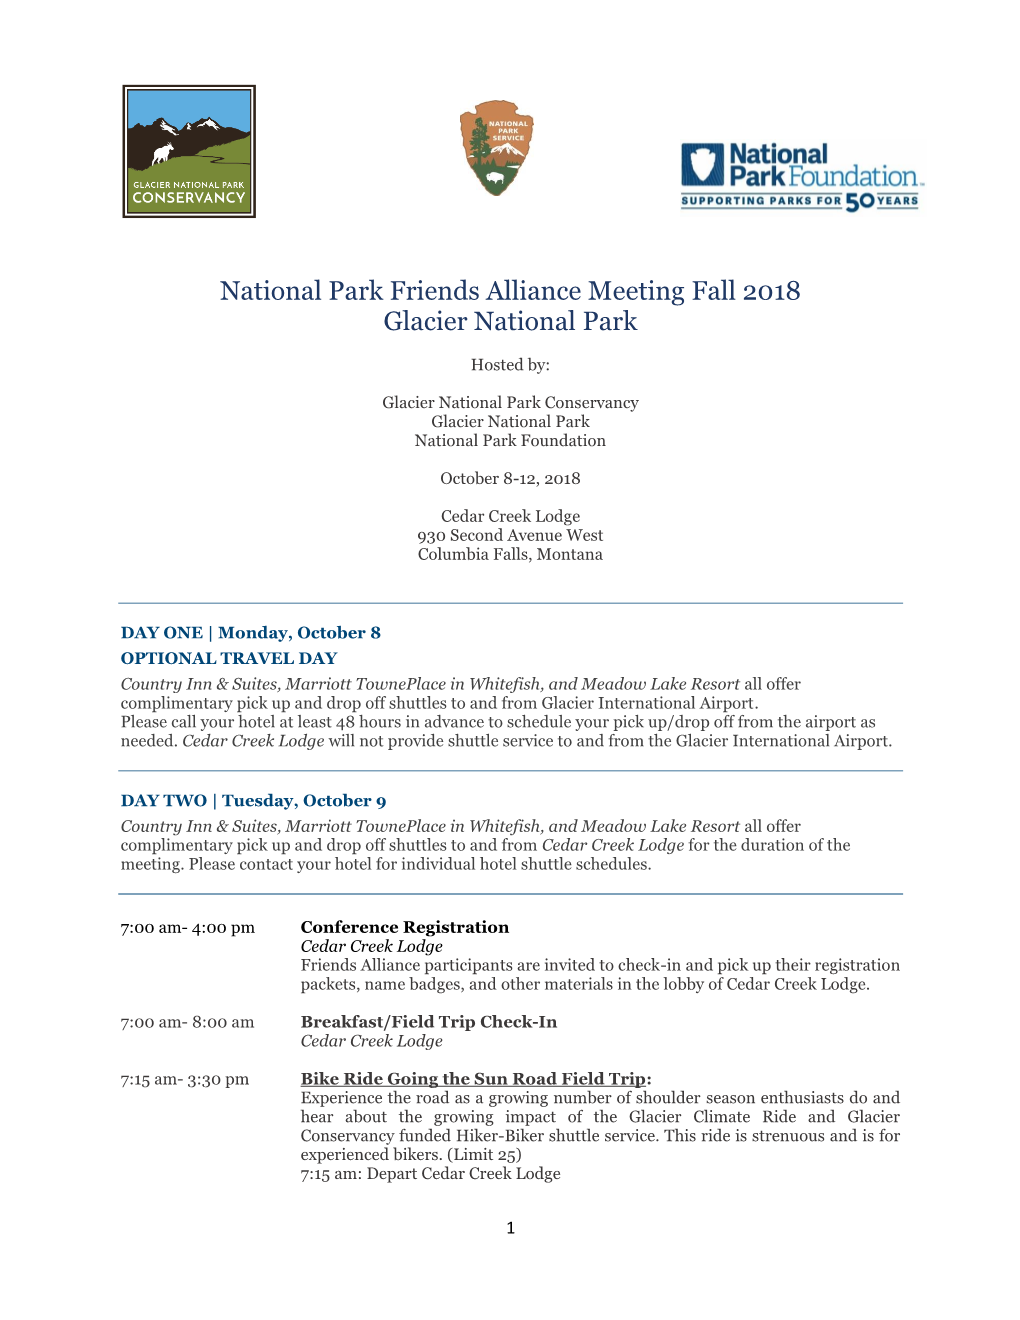 National Park Friends Alliance Meeting Fall 2018 Glacier National Park